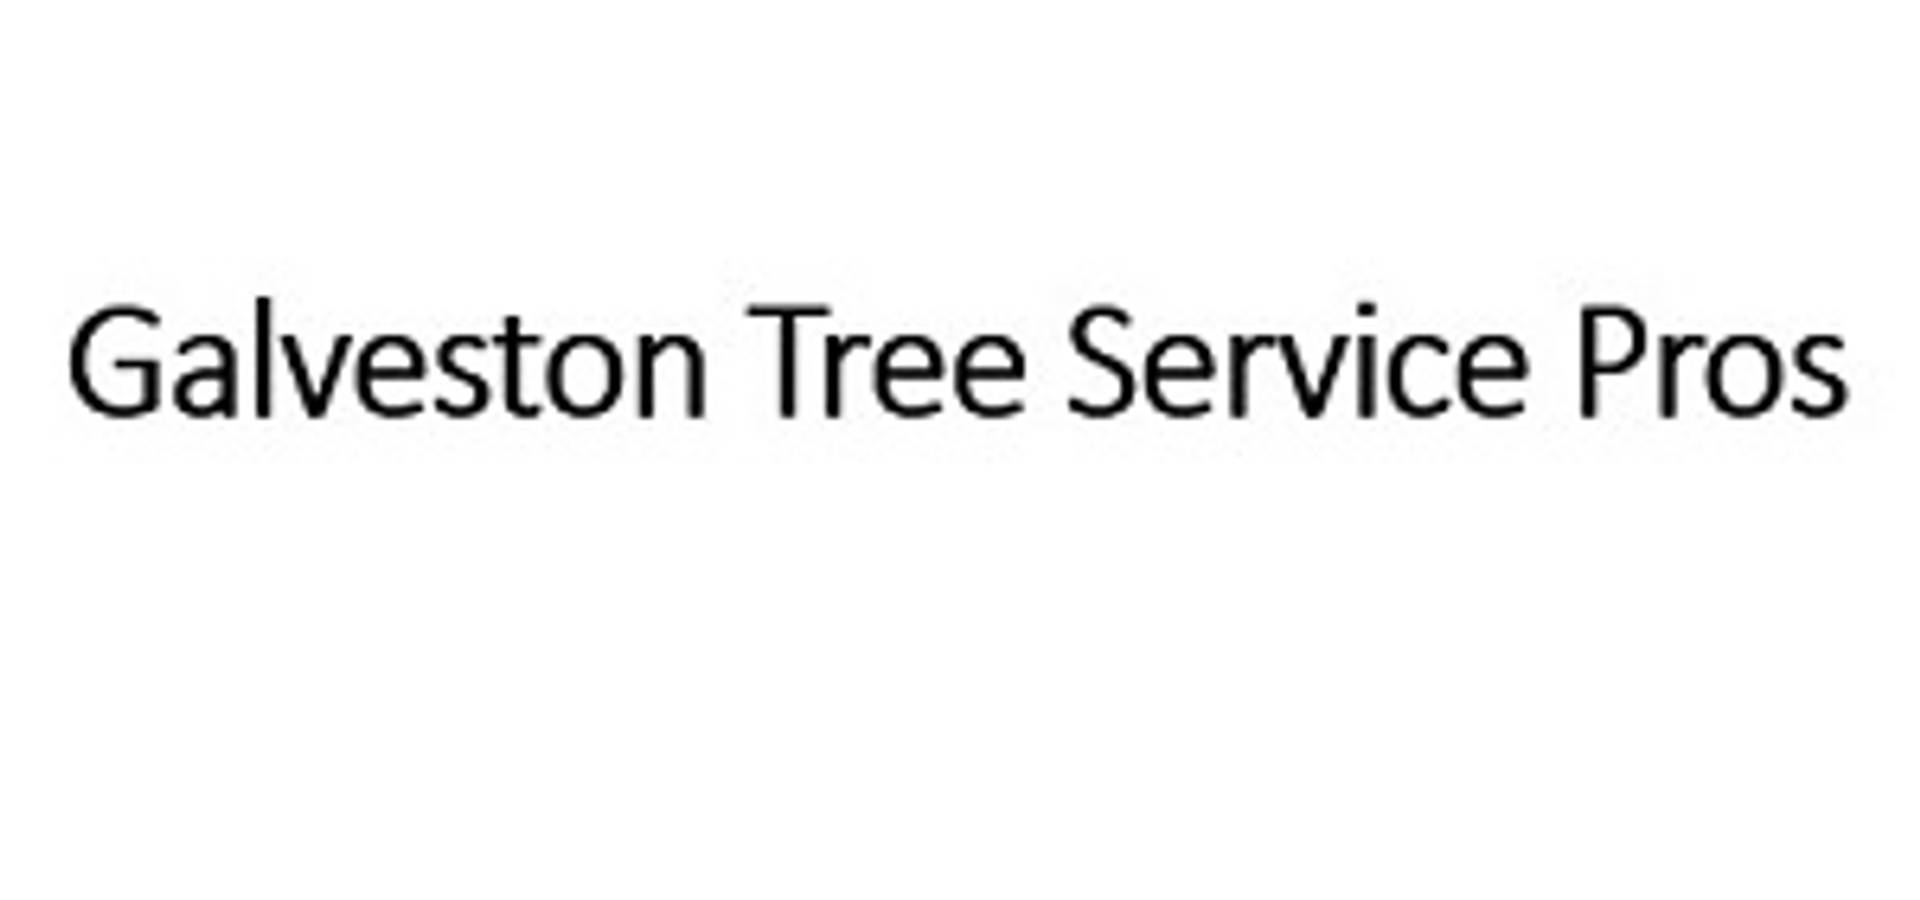 Galveston Tree Service Pros